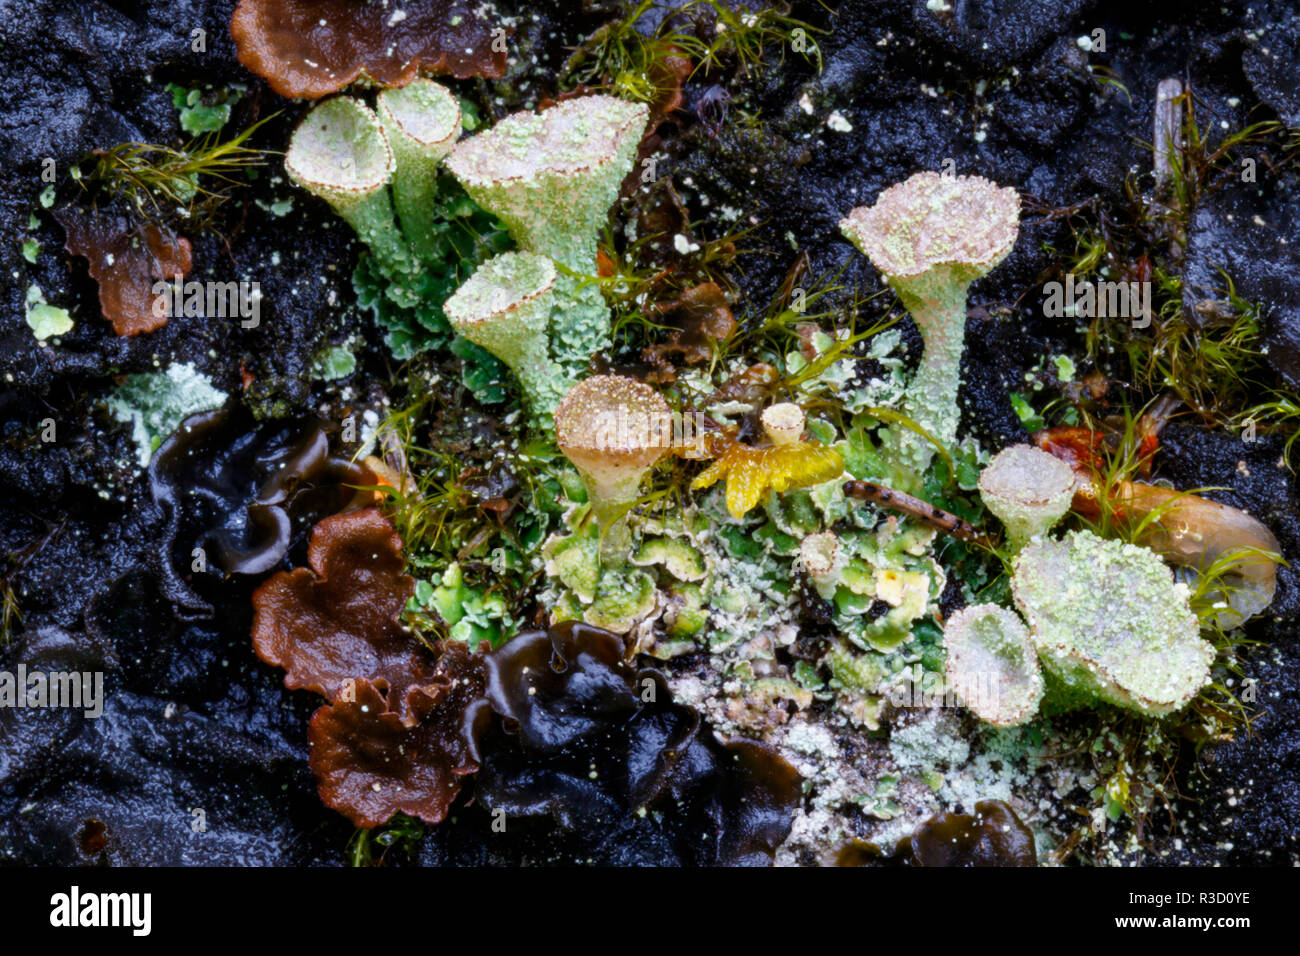 USA, Alaska. Close-up of lichen and moss on a boulder. Stock Photo